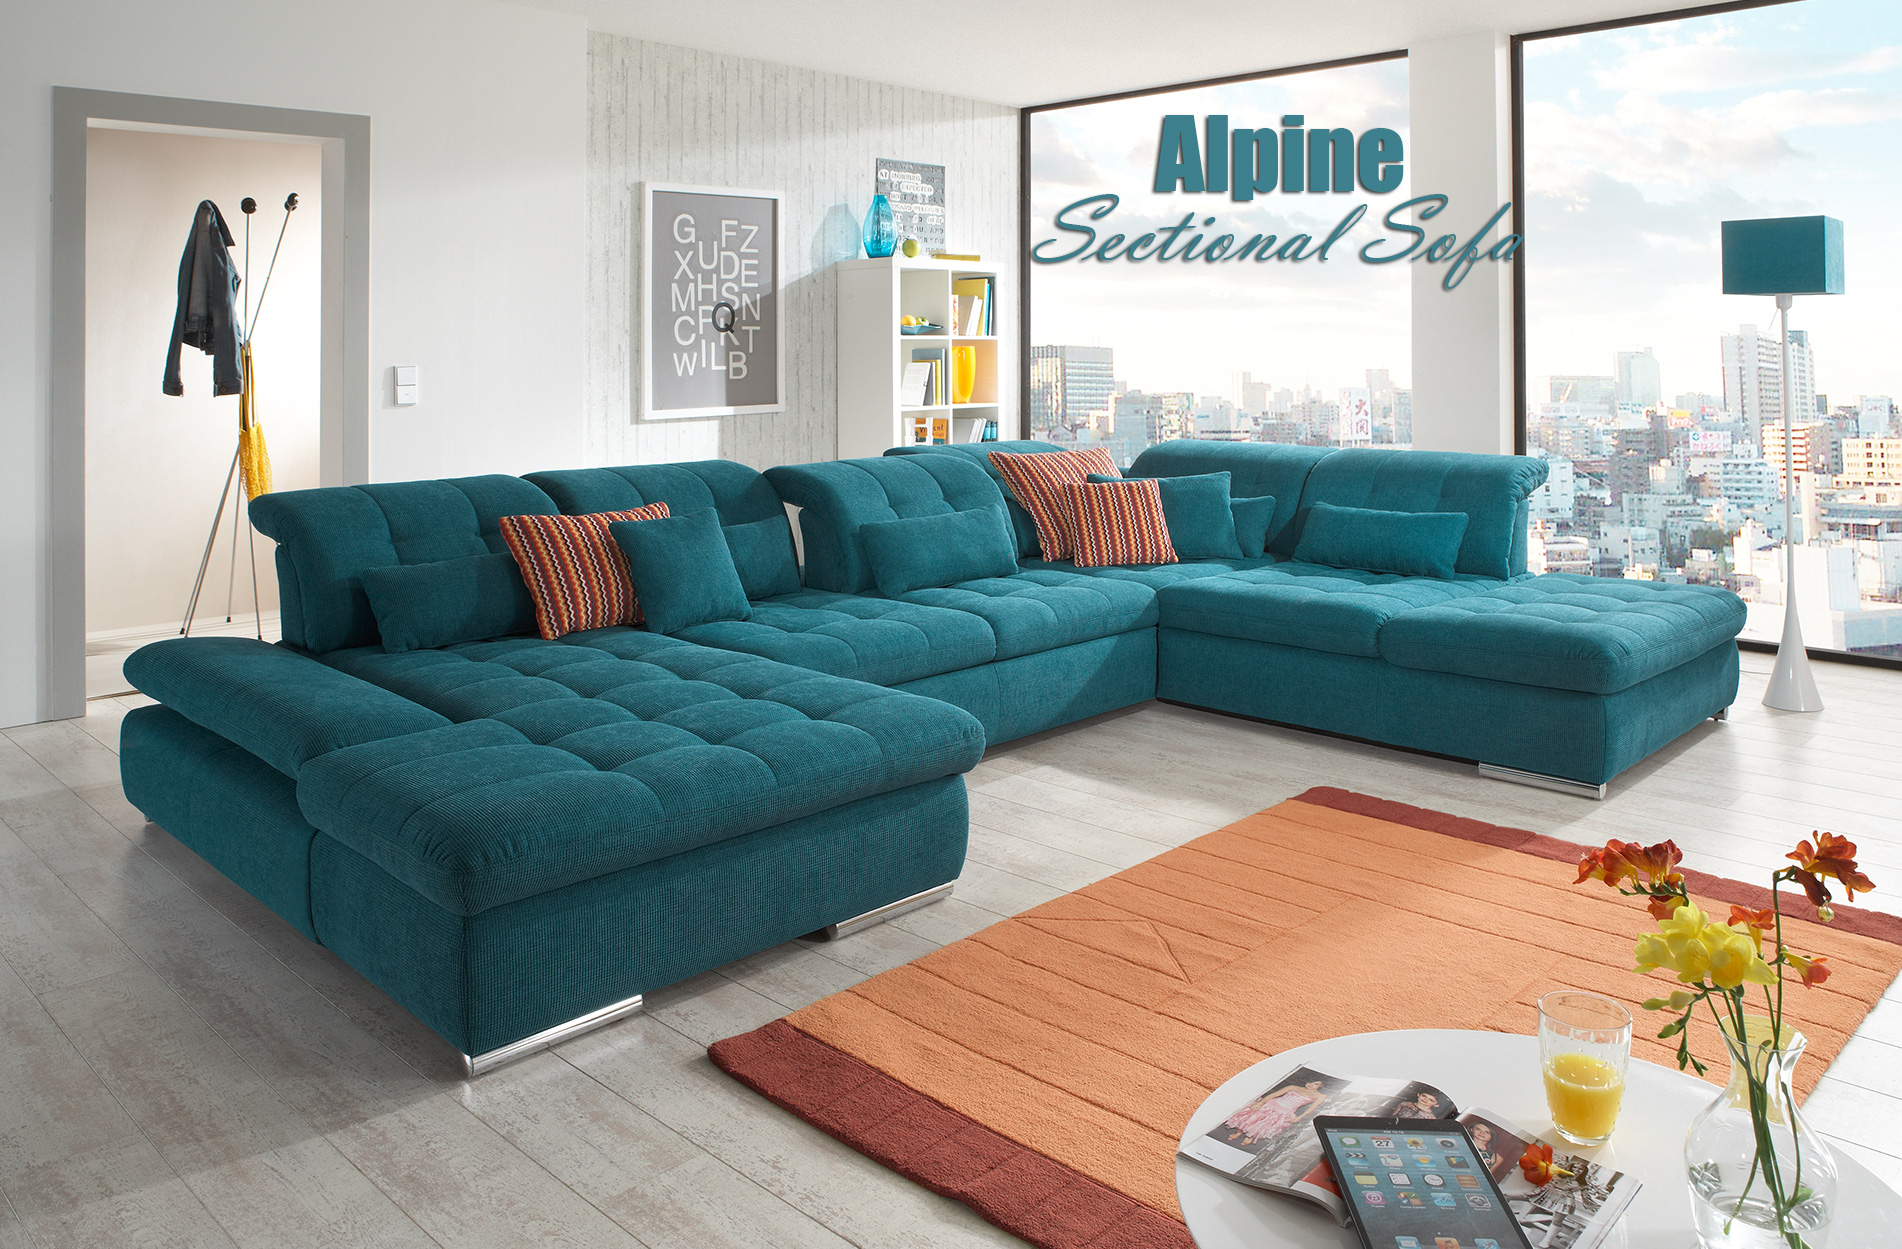 Alpine Sectional Sofa, Cheap